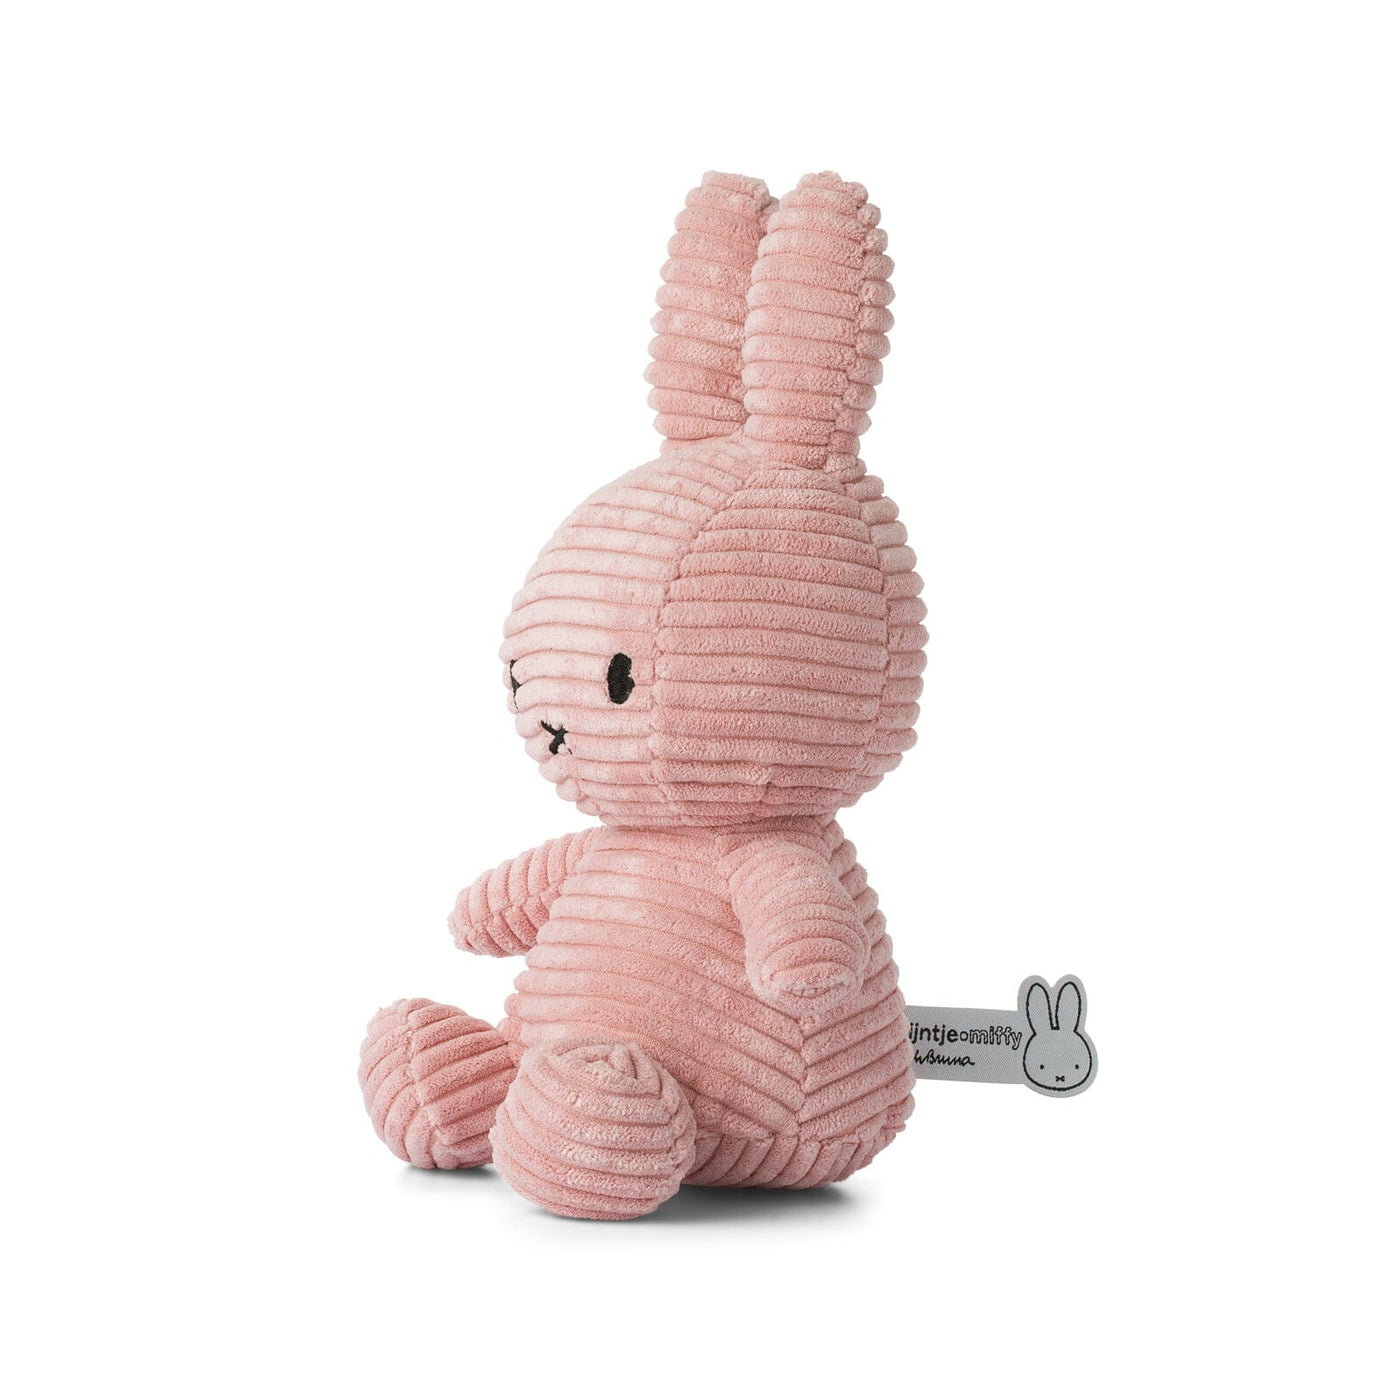 Miffy Sitting Corduroy Pink - 23cm Soft Toy Miffy 